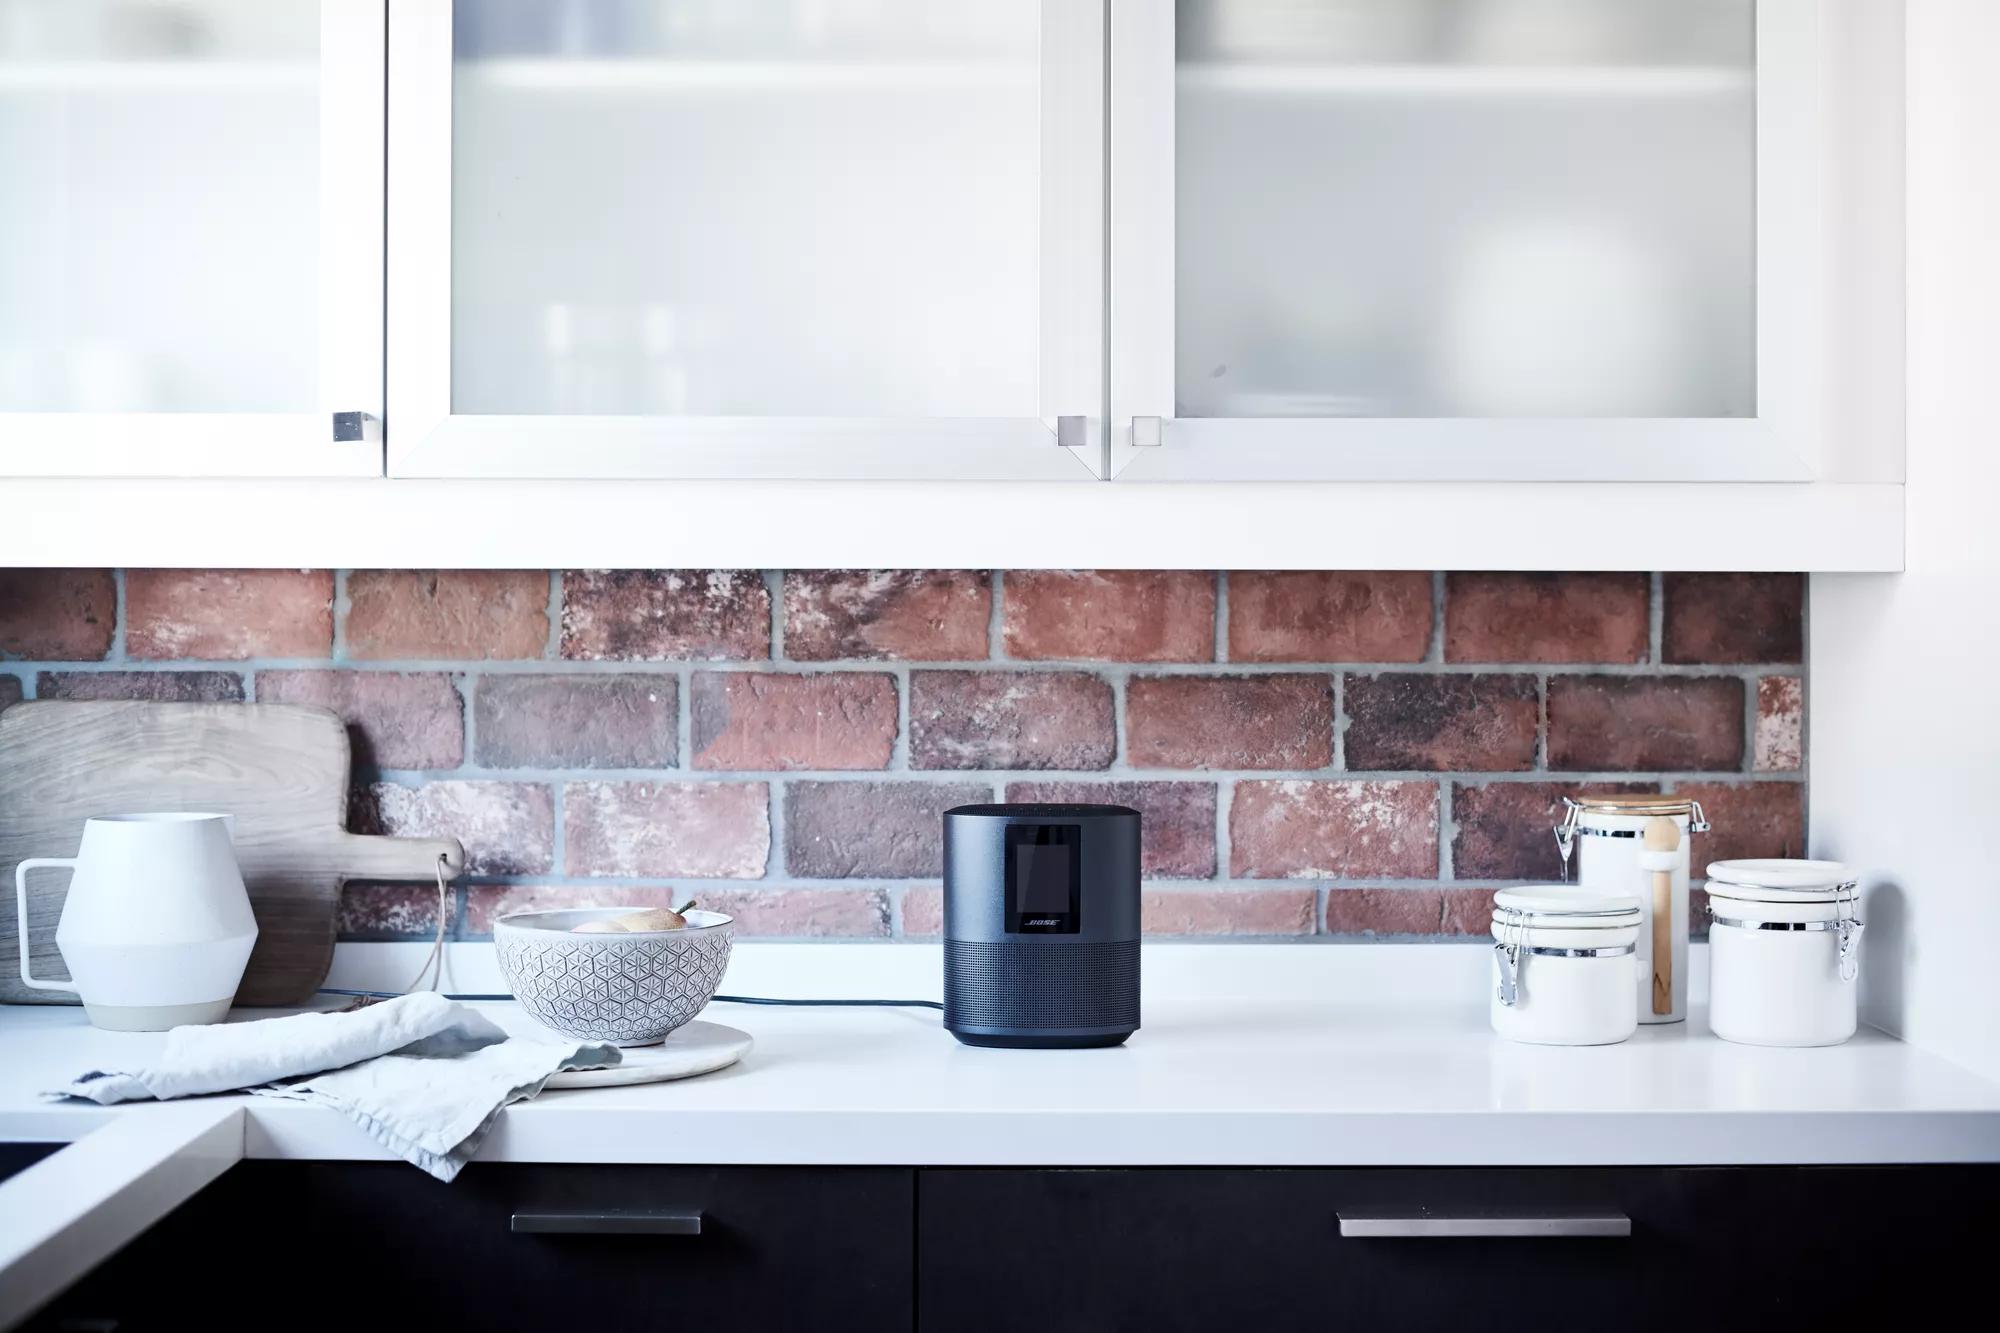 Bose Smart Speaker 500 on a kitchen counter